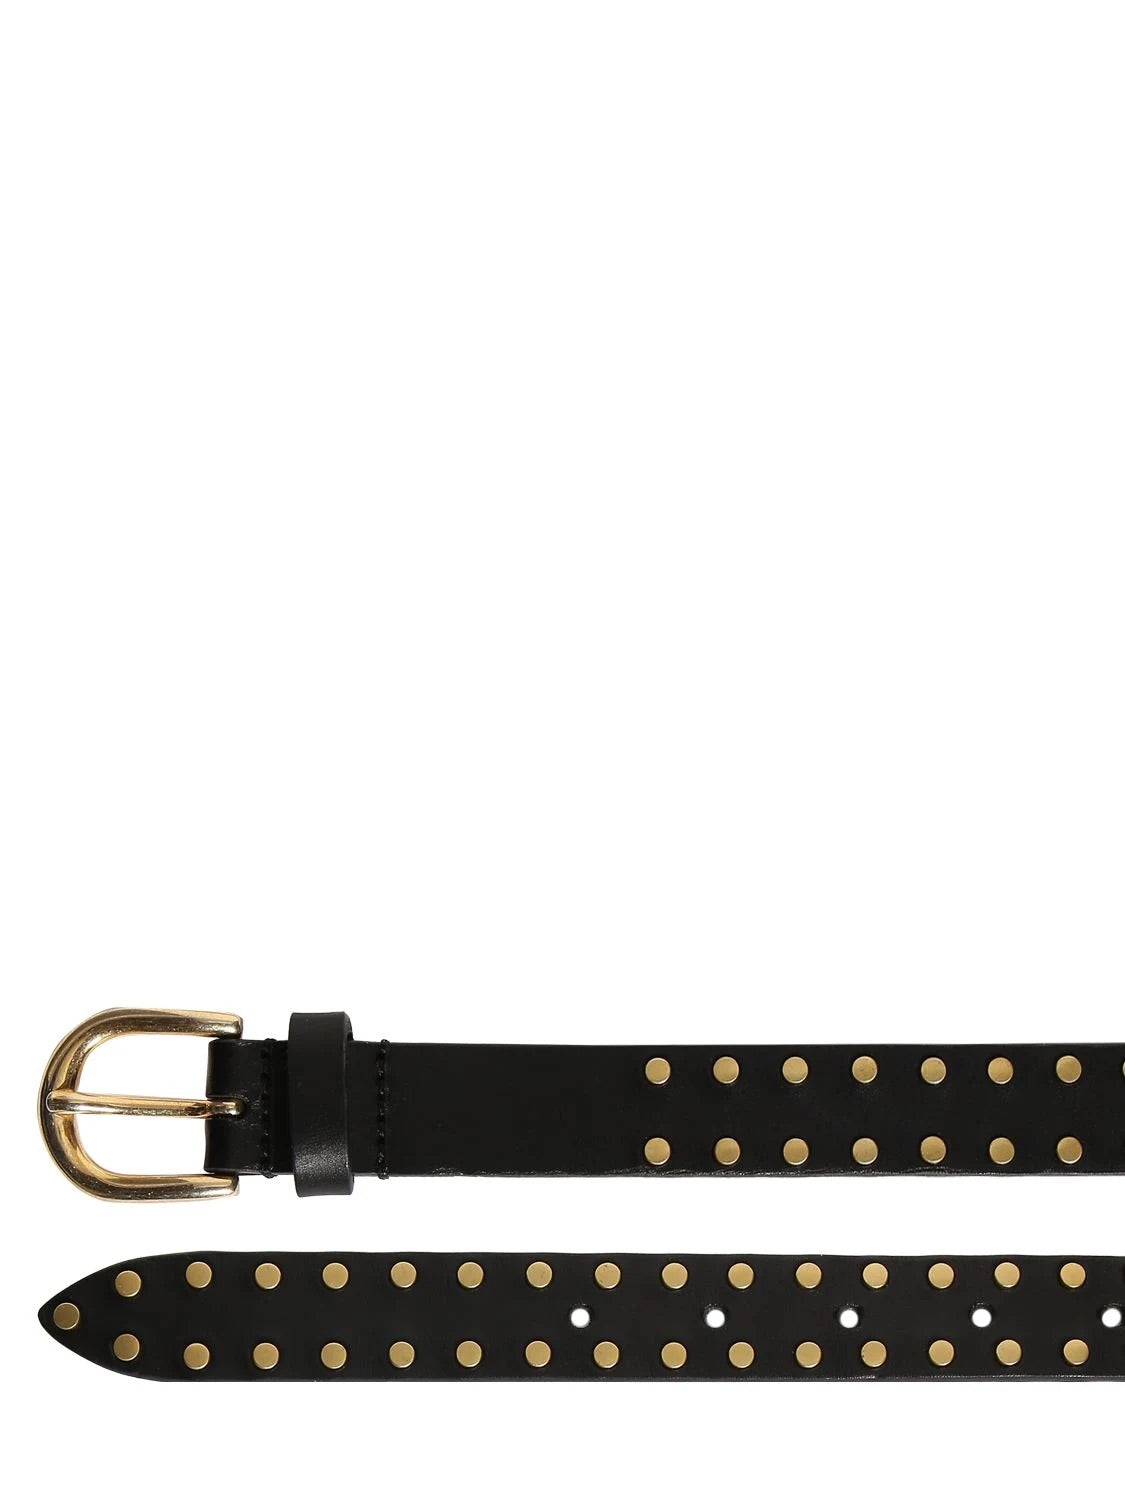 Zap belt, black gold stud